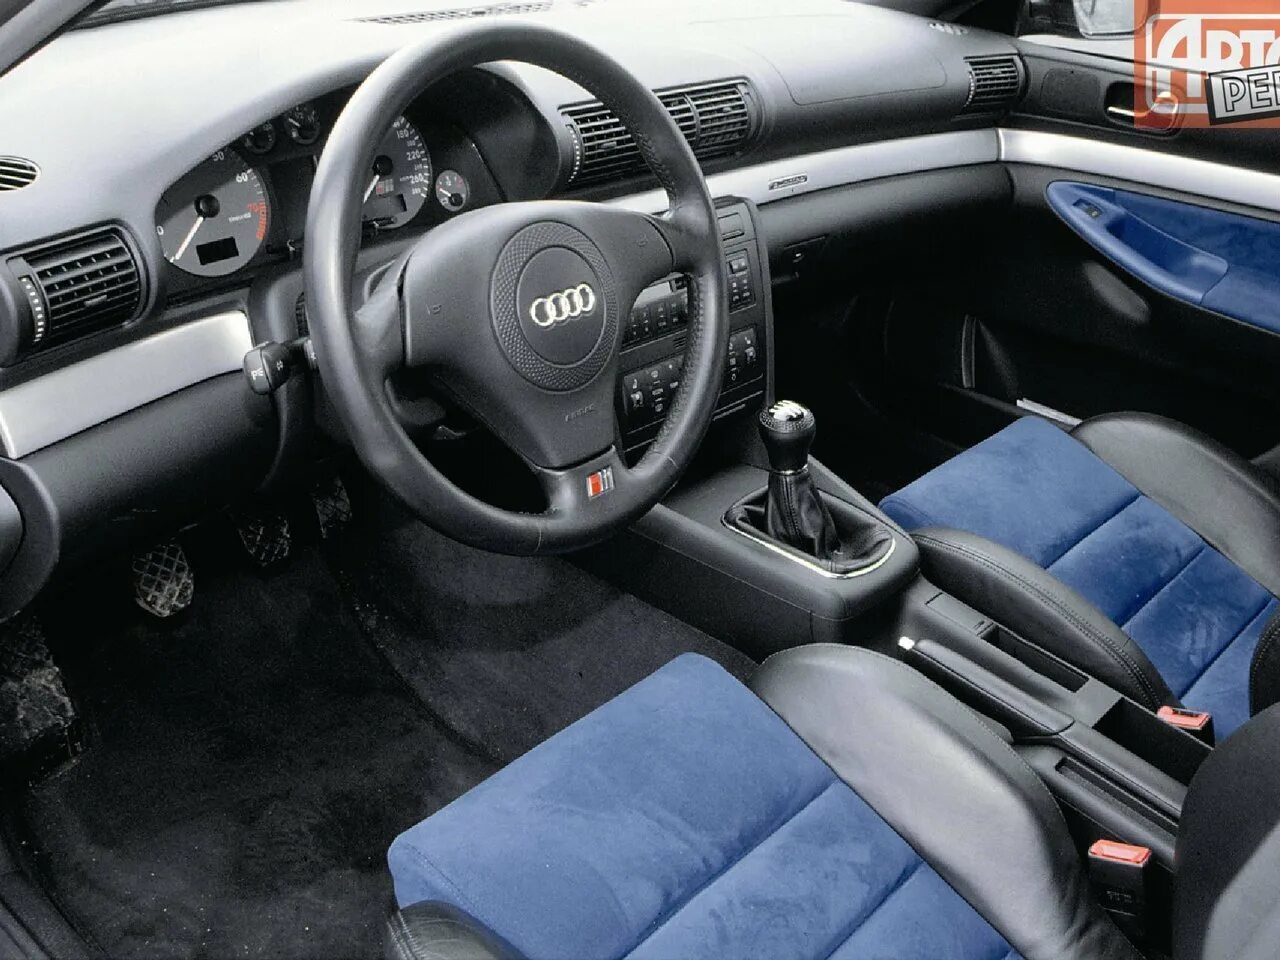 B 5 b2 7. Audi s4 b5 2001 Interior. Audi s4 b5 салон. Audi a4 b5 салон. Audi a4 b5 салон 1997.